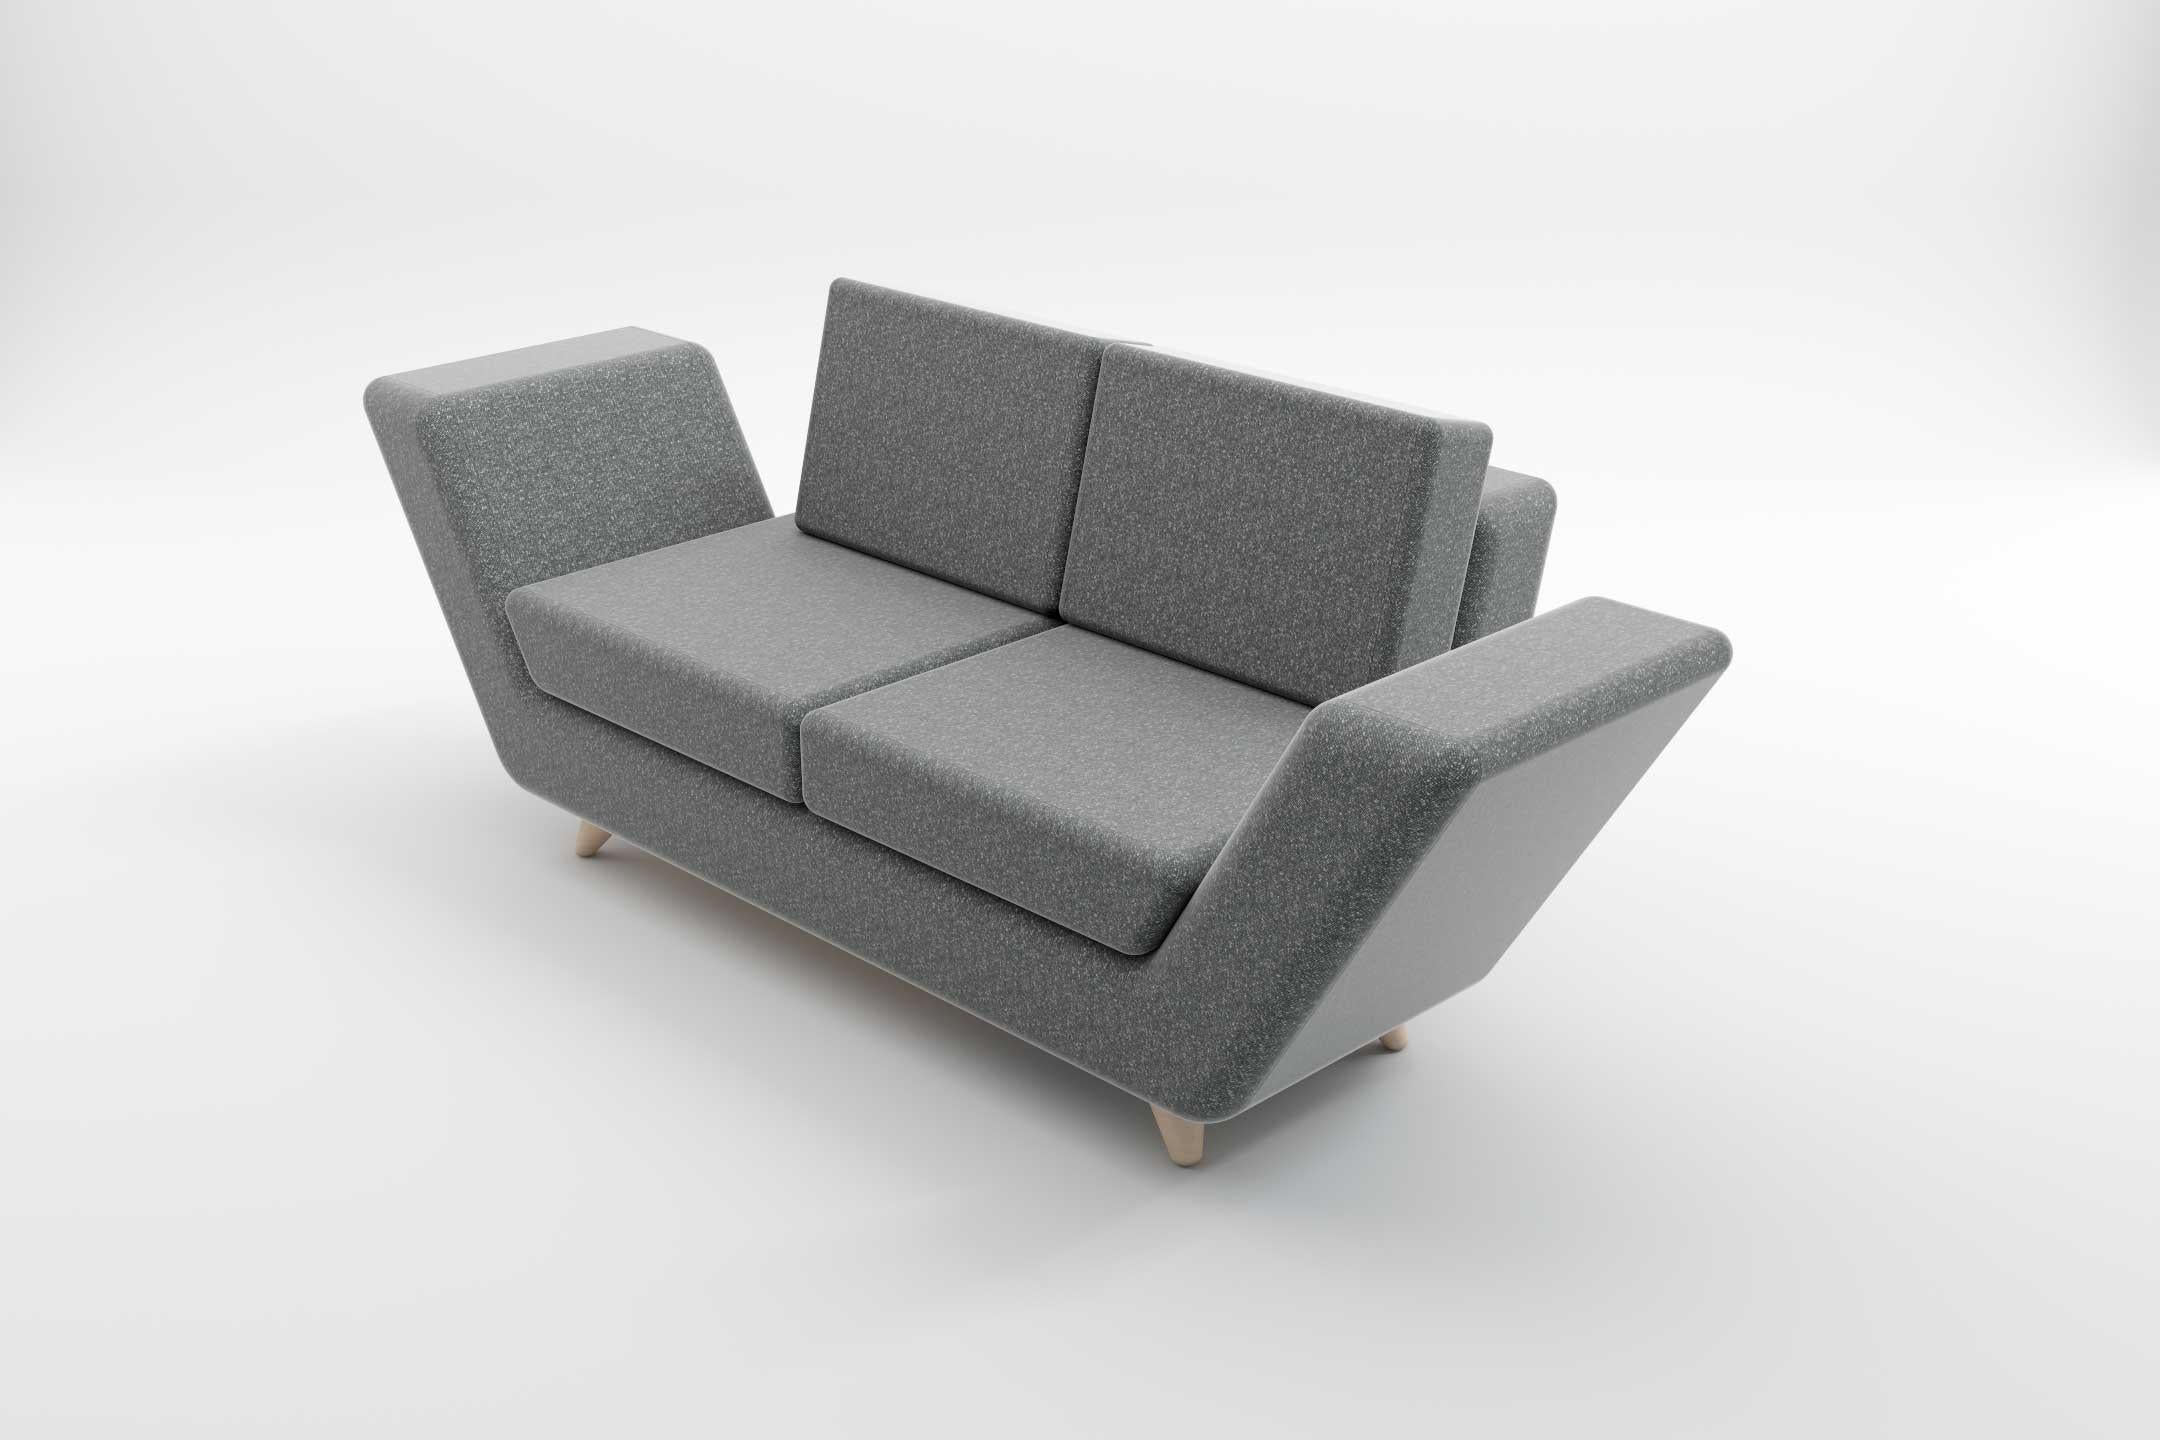 European Apex 2 Seat Sofa - Modern Scandinavian Sofa with Wooden Legs For Sale